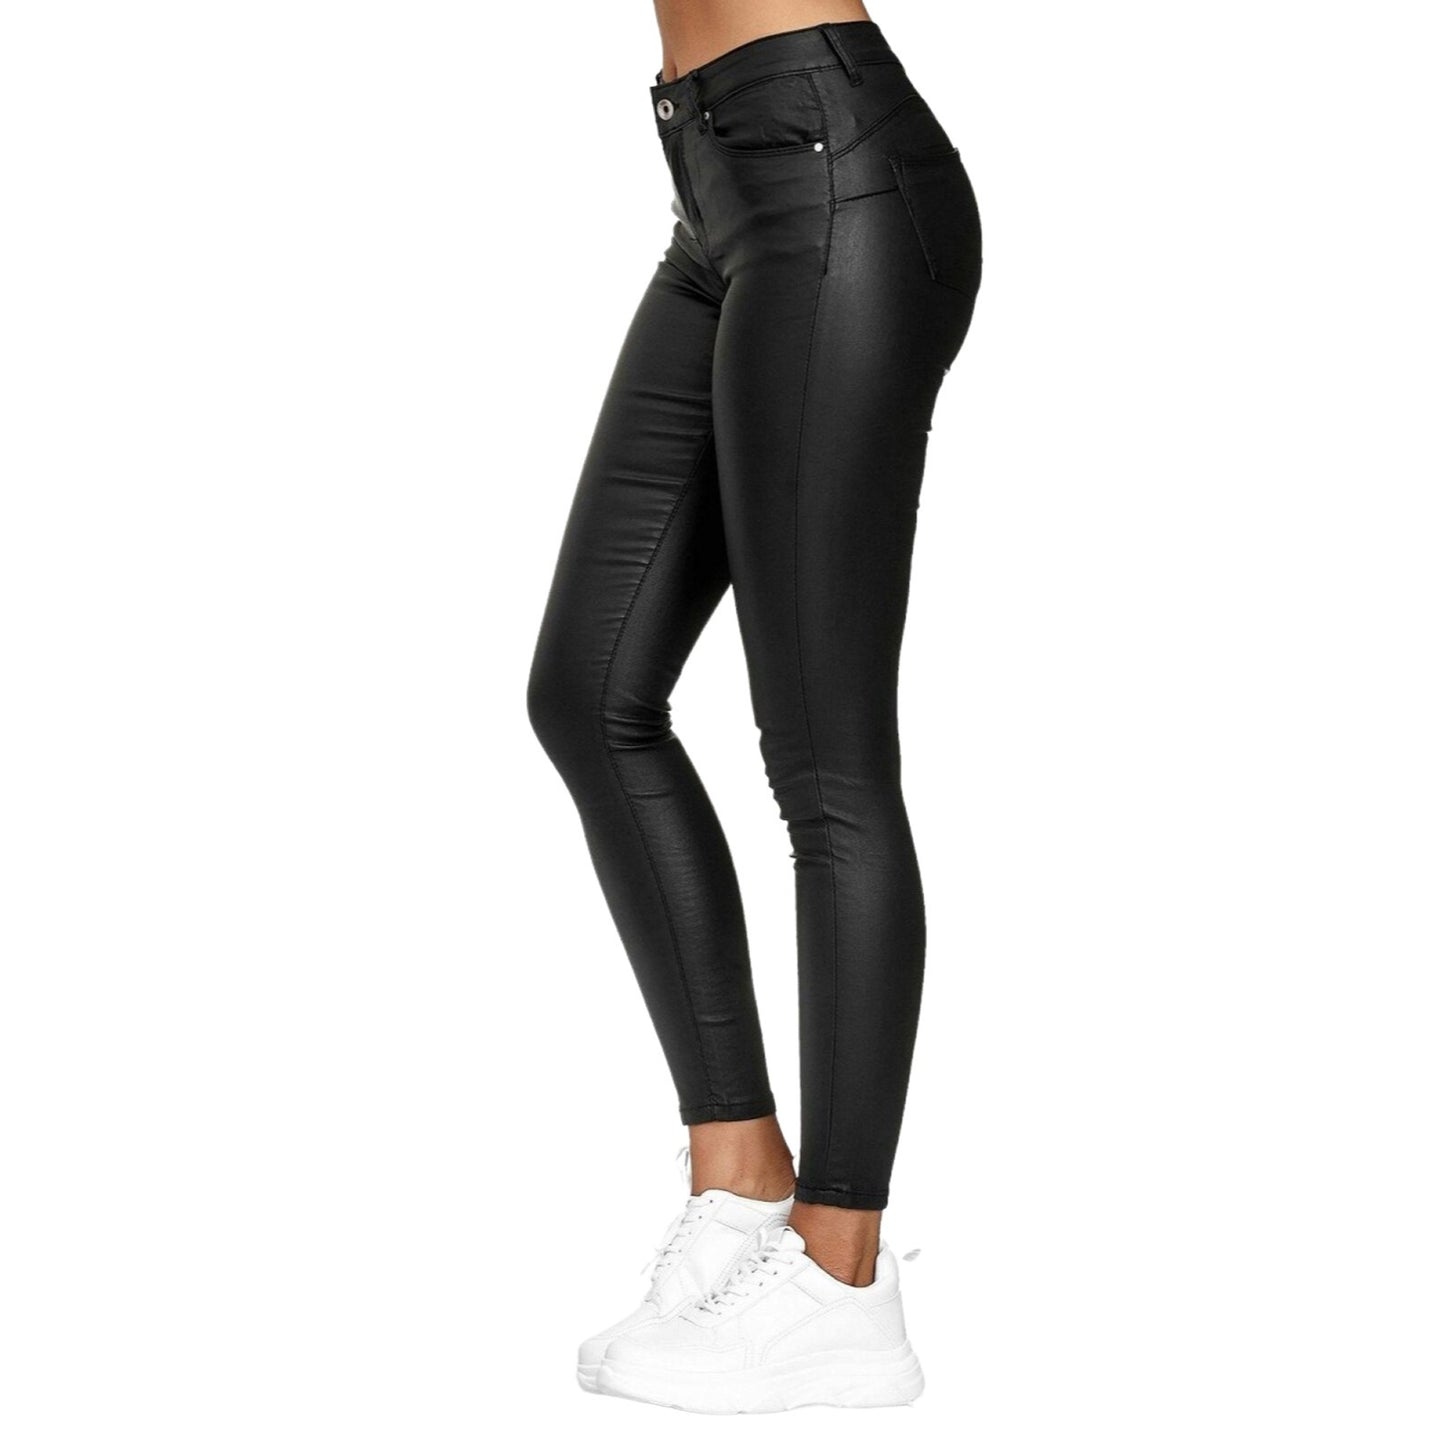 New European and American Women's Casual Pants Leggings PU Leather Pants